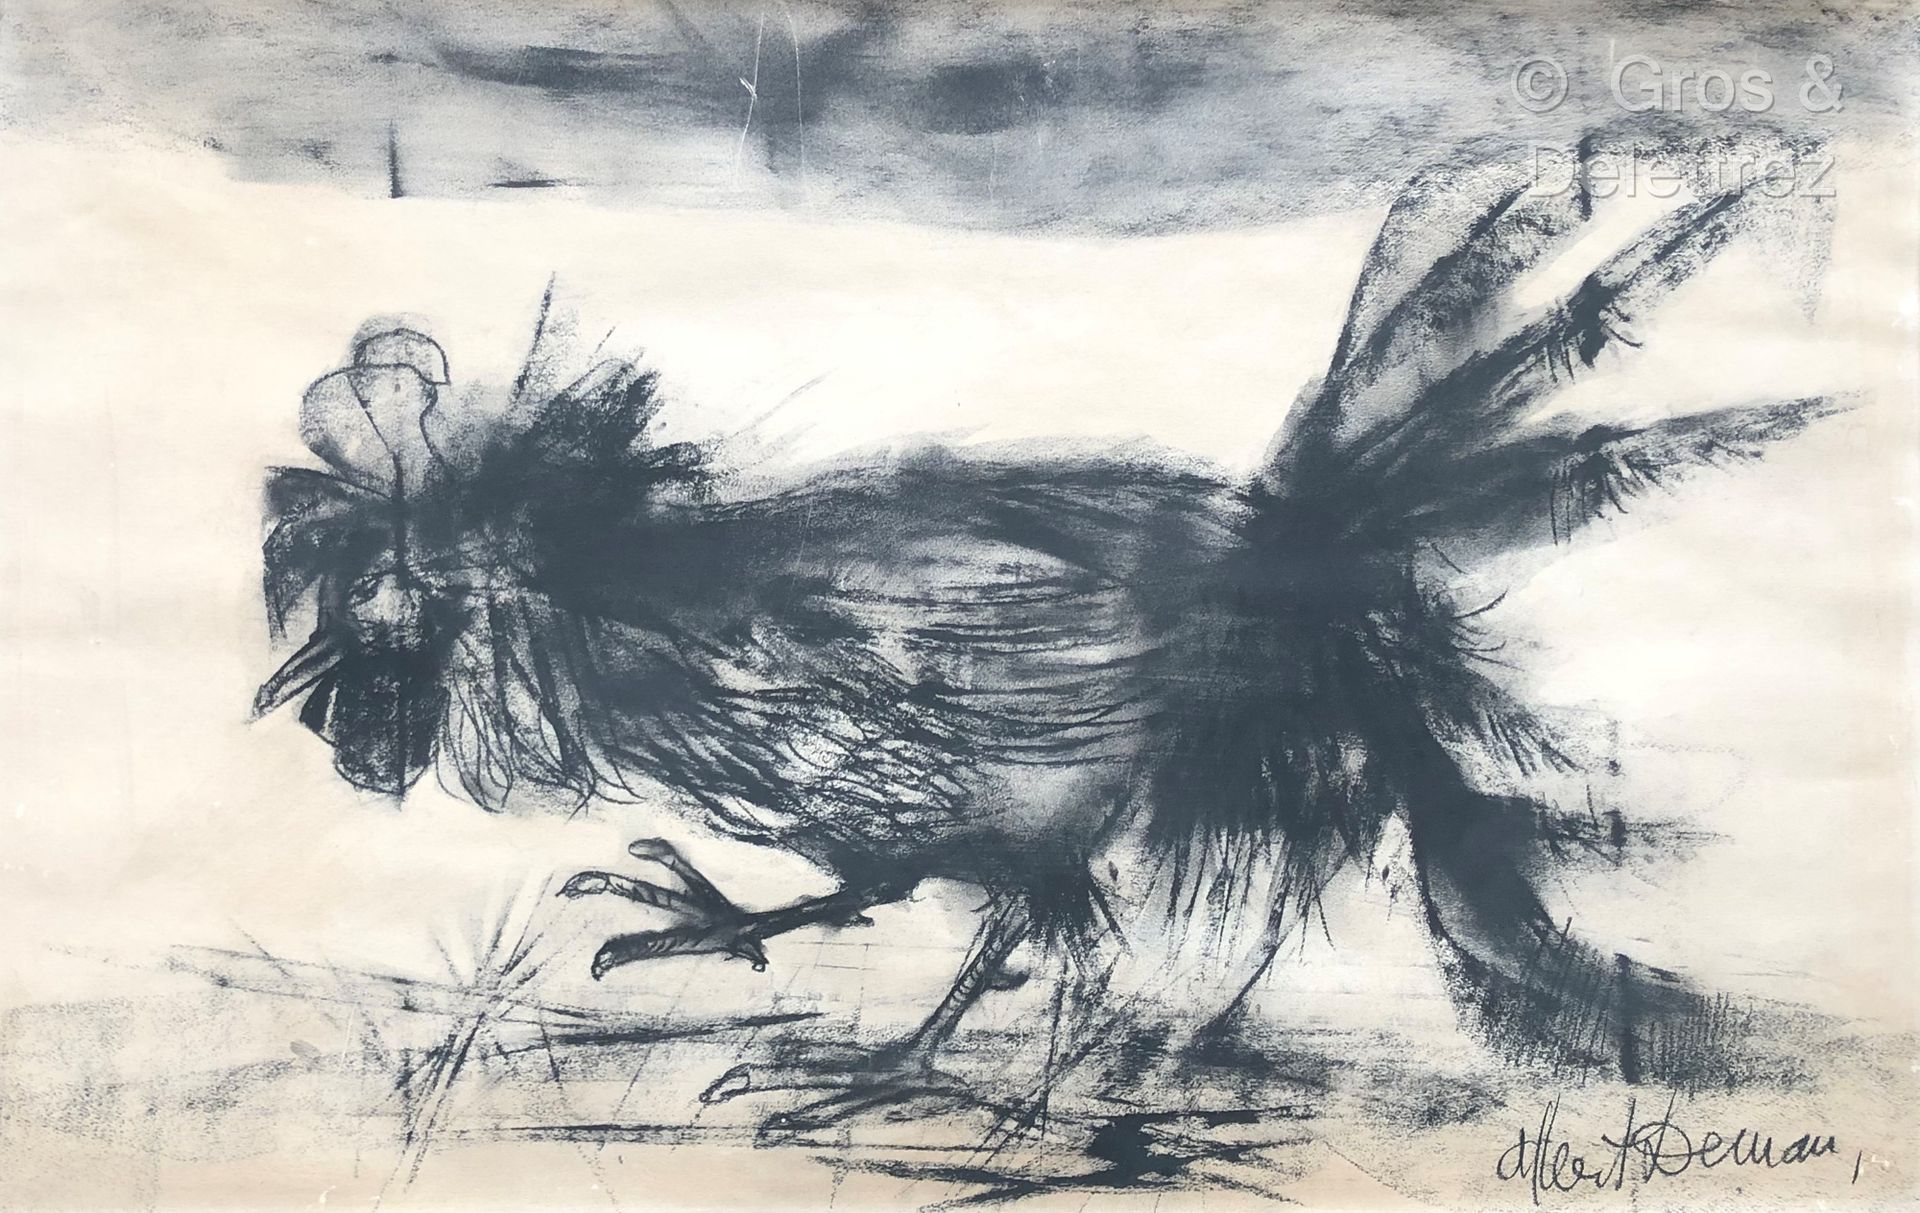 Null (SD) 阿尔伯特-德曼(1929-1996)

公鸡

纸上炭笔，右下角有签名

53 x 84 cm